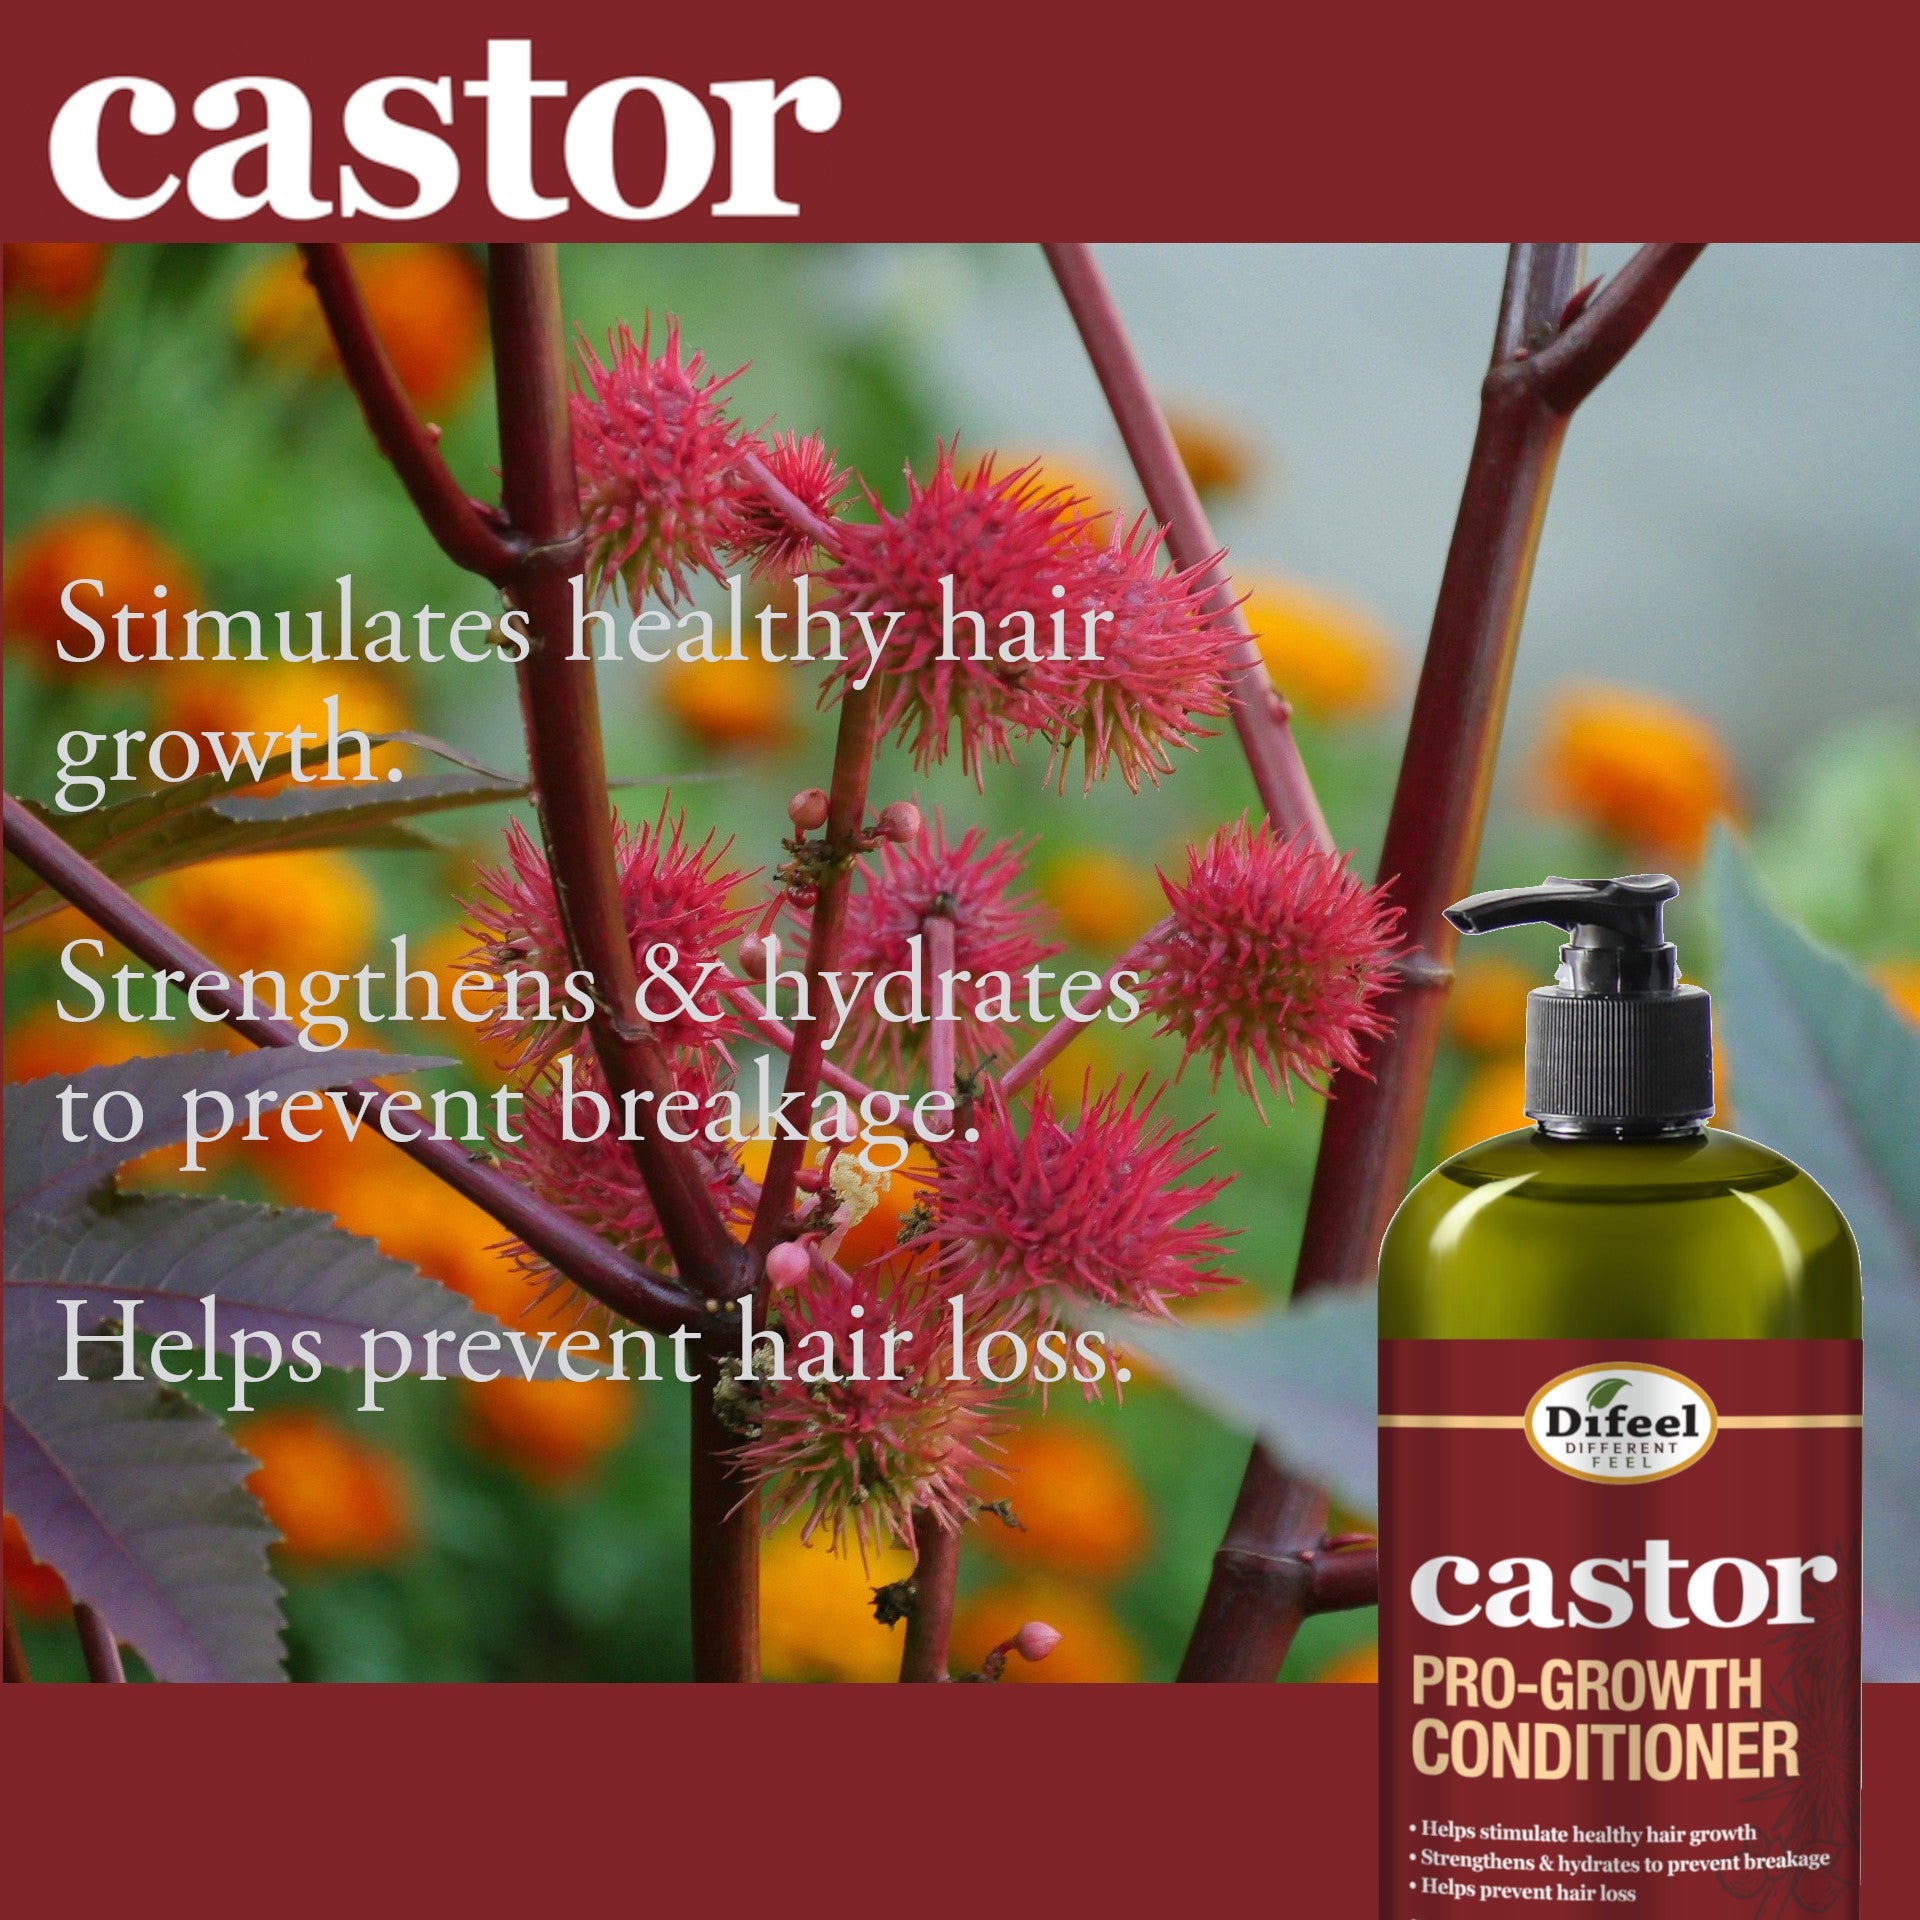 Difeel 3-PC Castor Pro-Growth Hair Growth: Cleansing & Treatment Set - Includes 12 oz. Shampoo, 12 oz.  Conditioner, & 2.5 oz. Root Stimulator